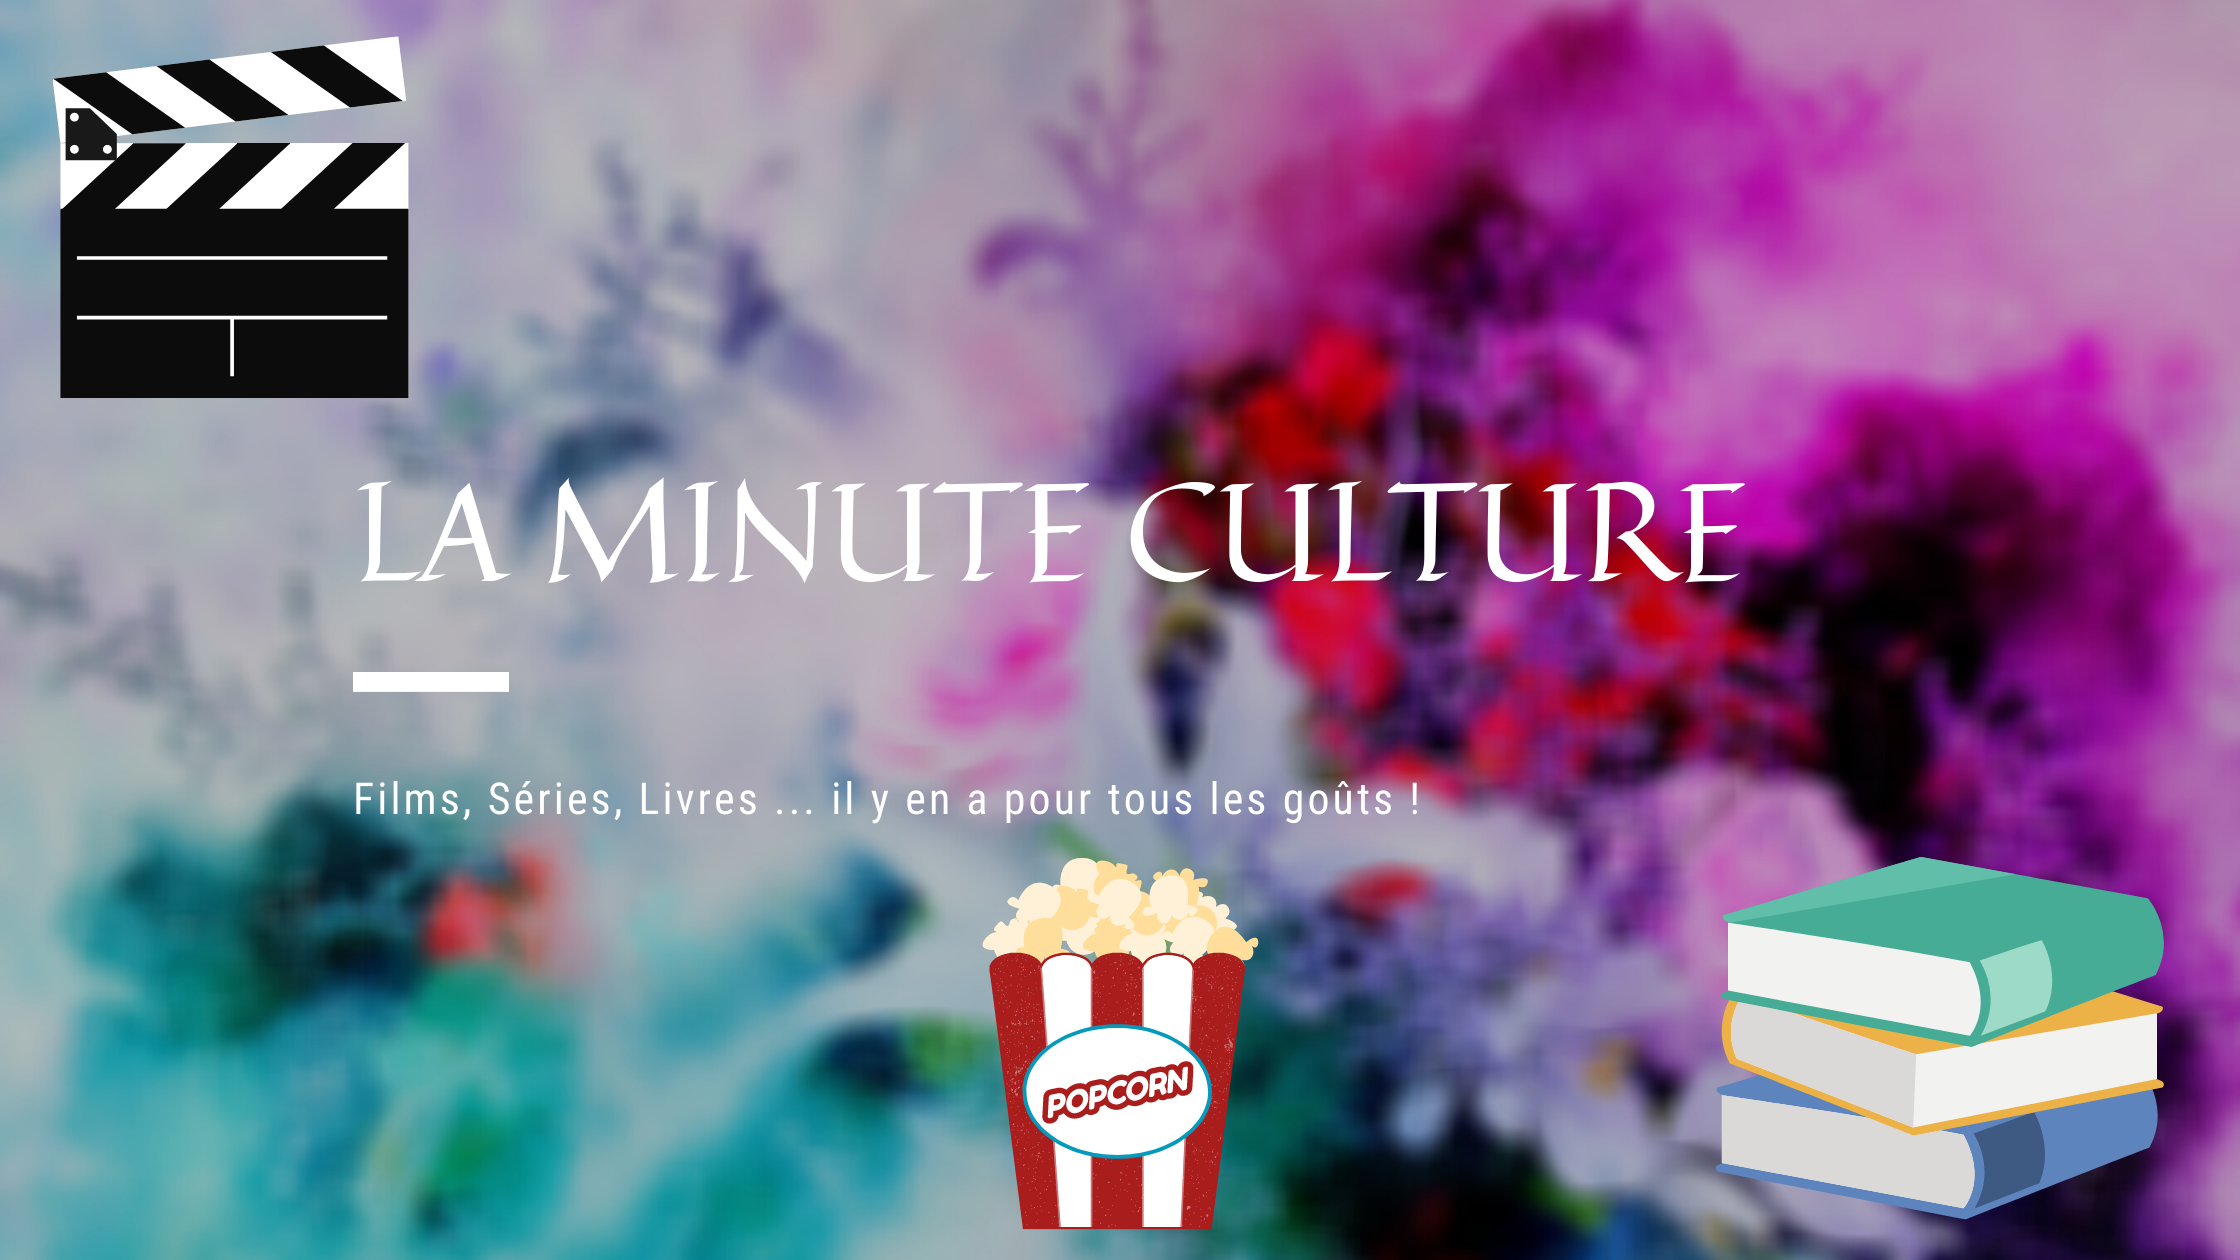 La minute culture - épisode 2